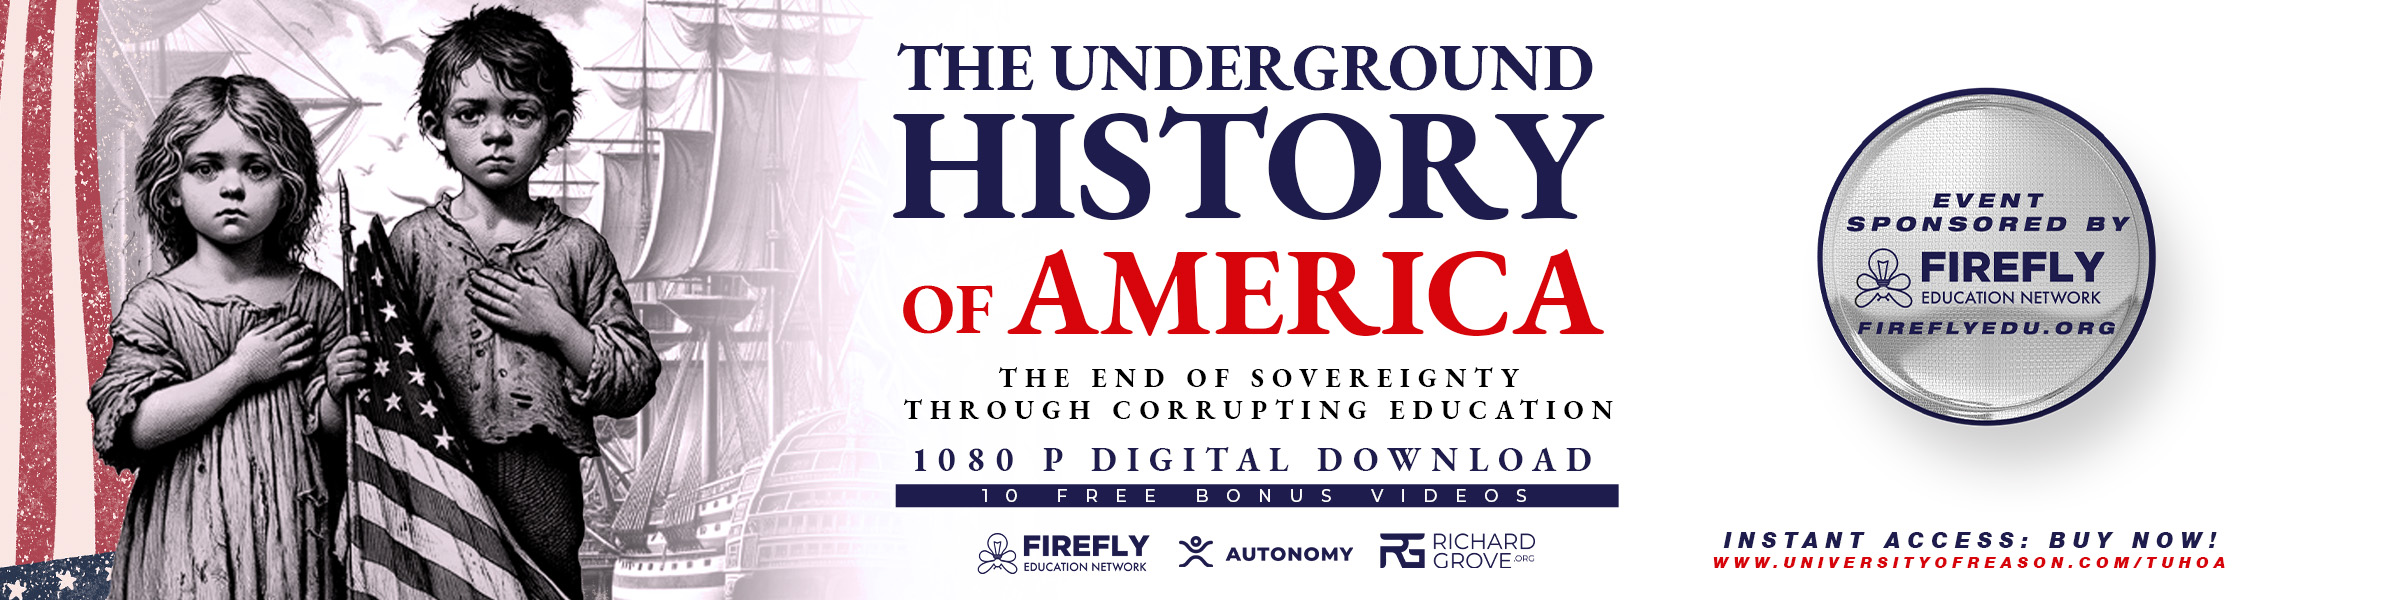 The Underground History of America